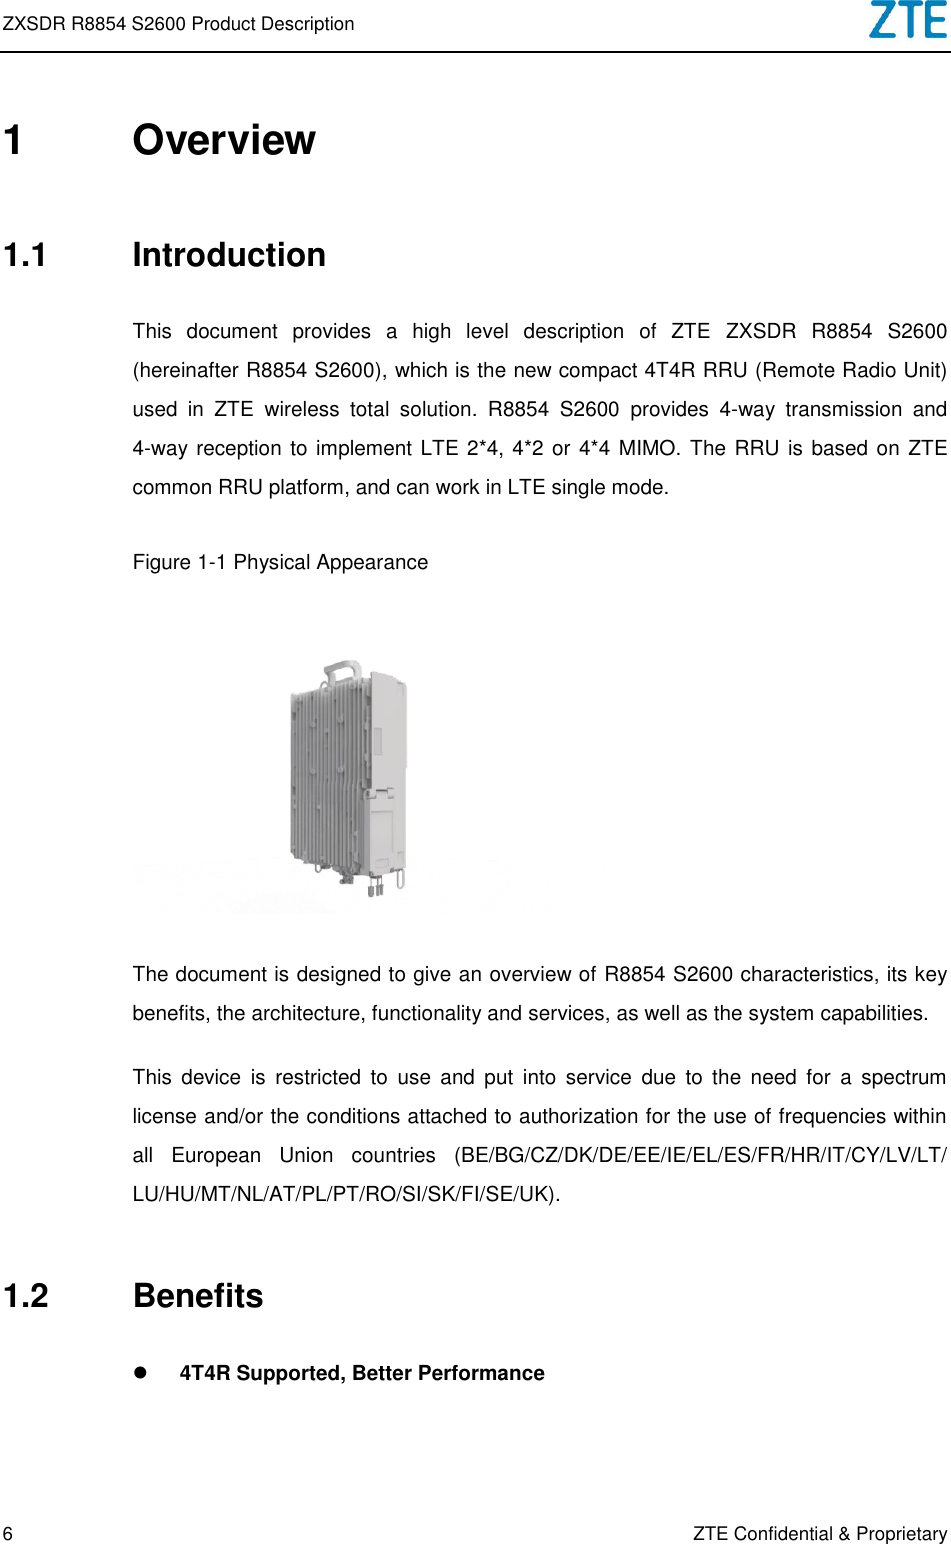 Page 8 of ZTE R8854S2600 Macro Radio Remote Unit User Manual ZXSDR R8854 S2600 Product Description